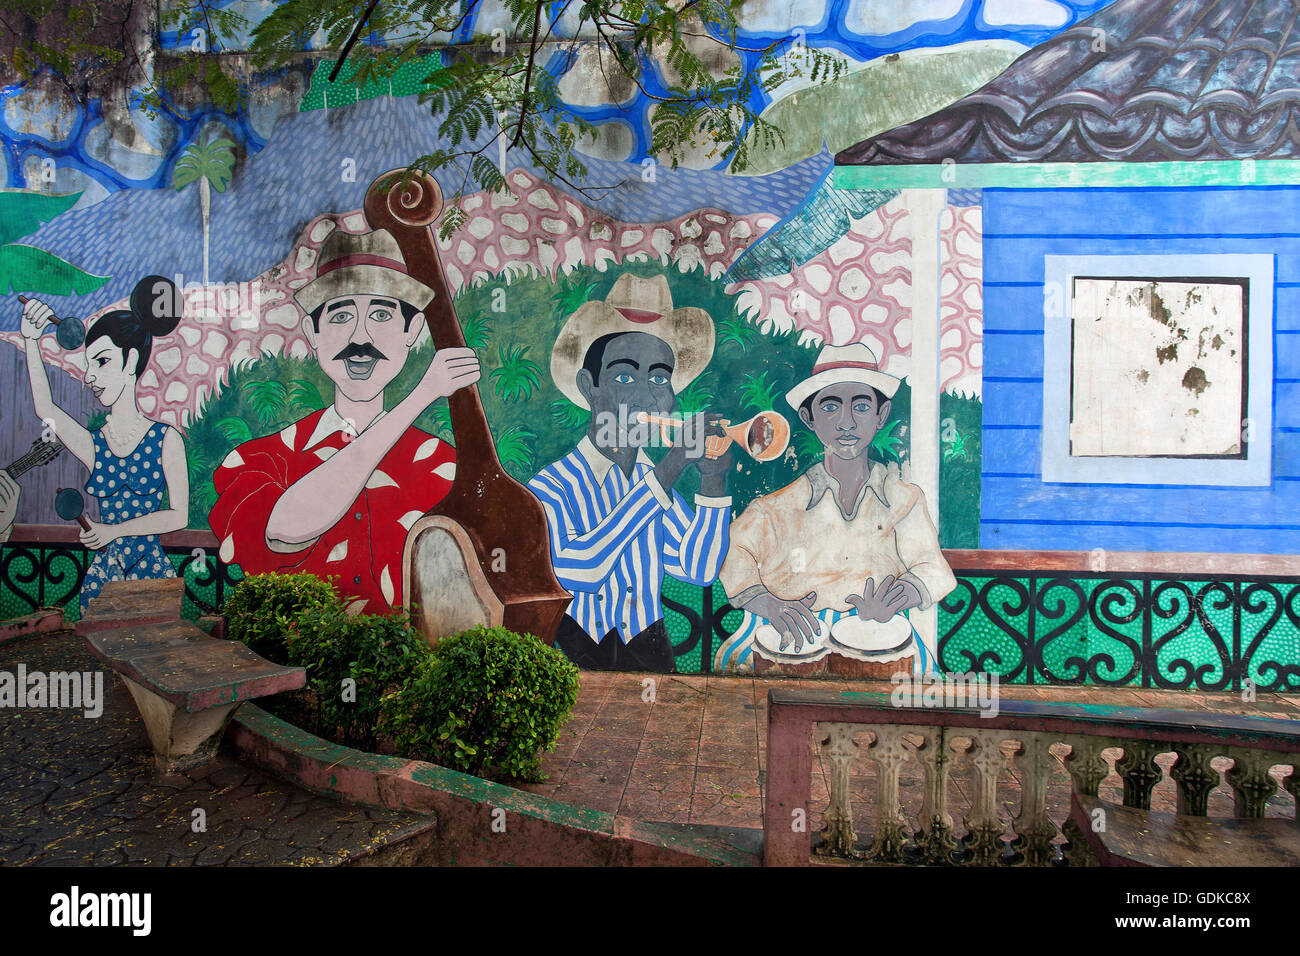 Painted house wall, graffiti, music group or band, Baracoa, Guantánamo Province, Cuba Stock Photo